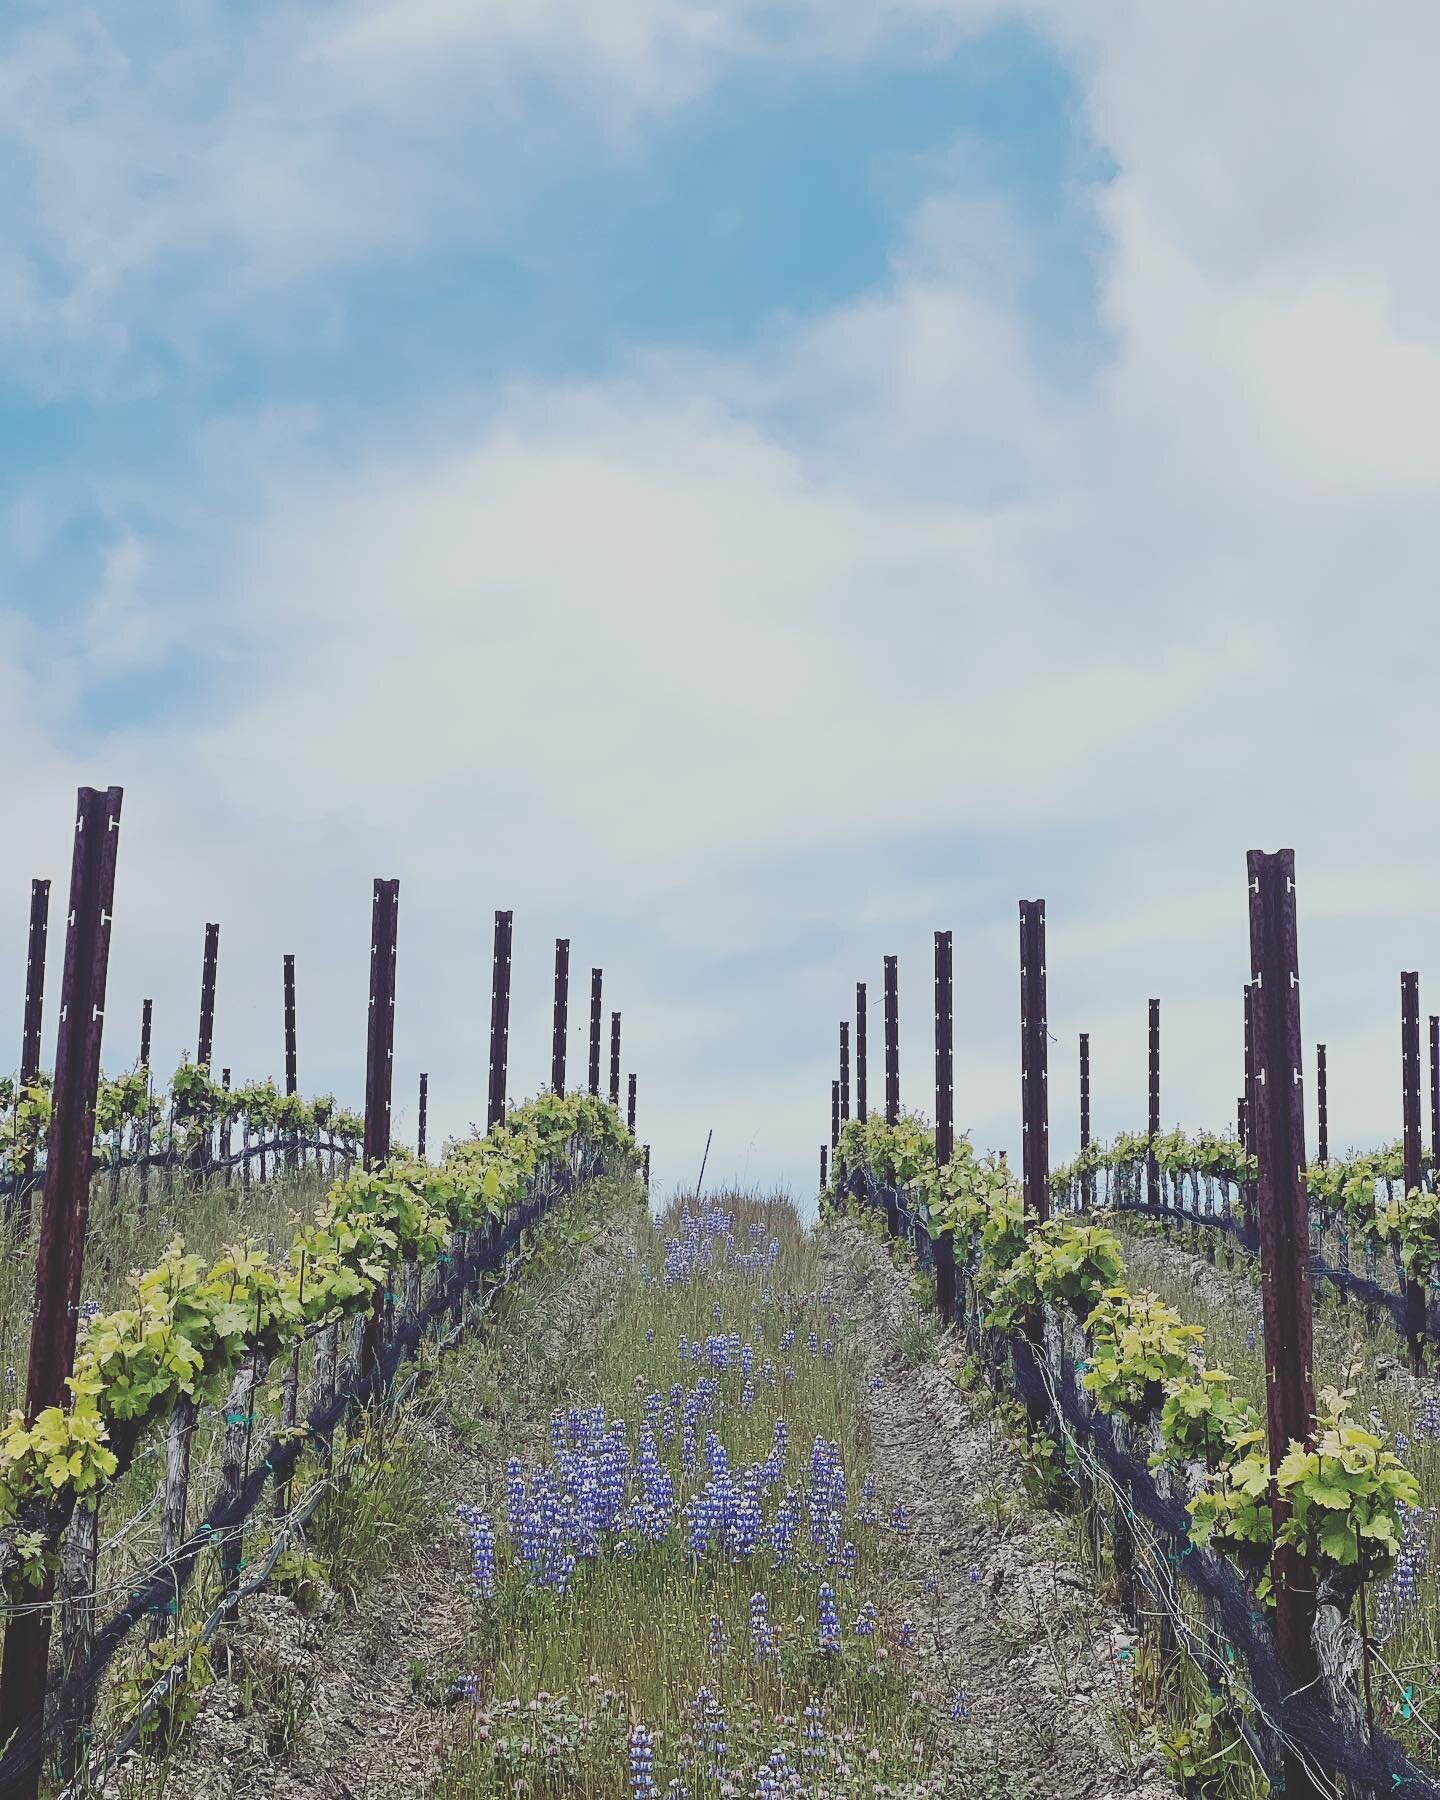 Pelio Vineyard in Carmel Valley makes some incredible Pinot Noir.